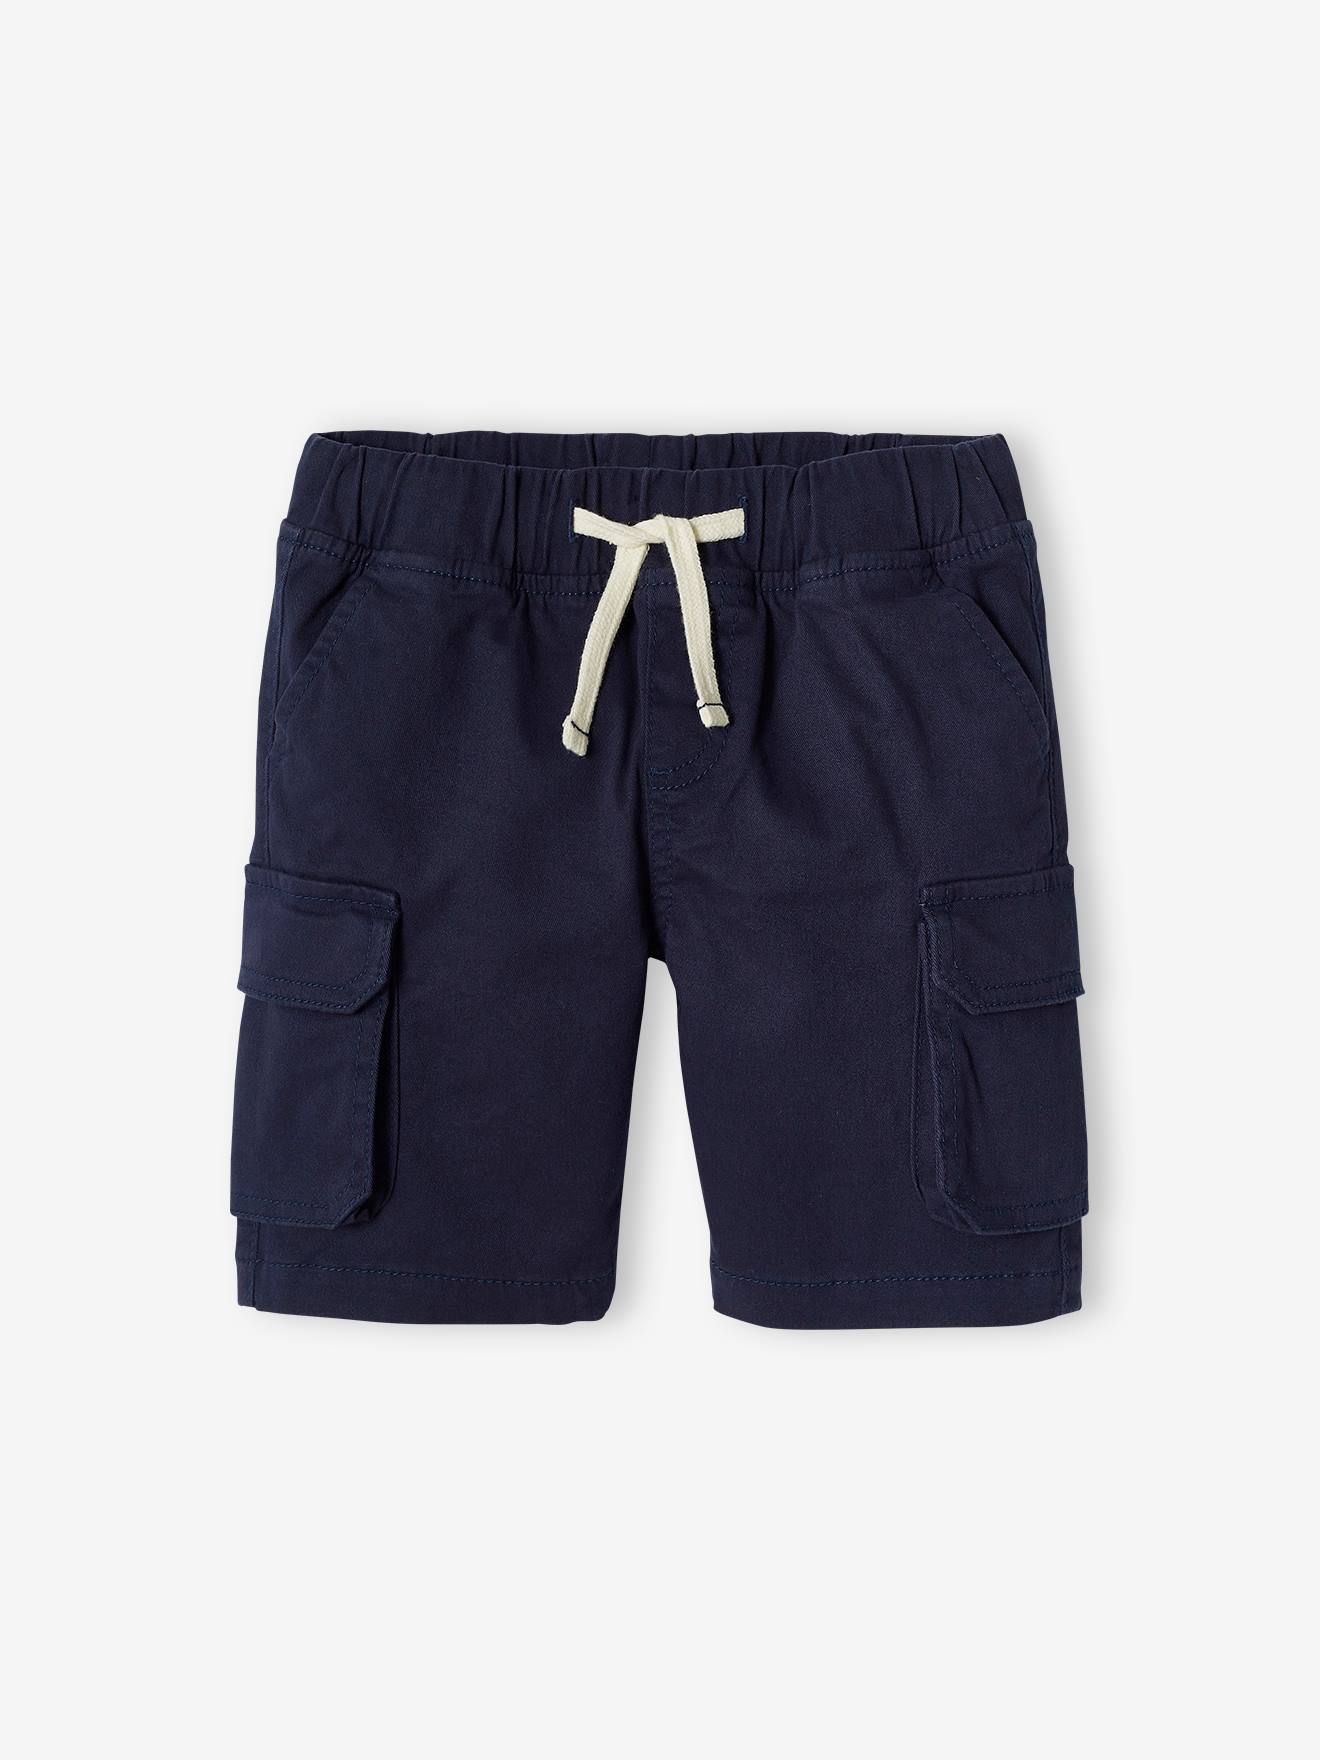 Cargo Shorts for Boys navy blue